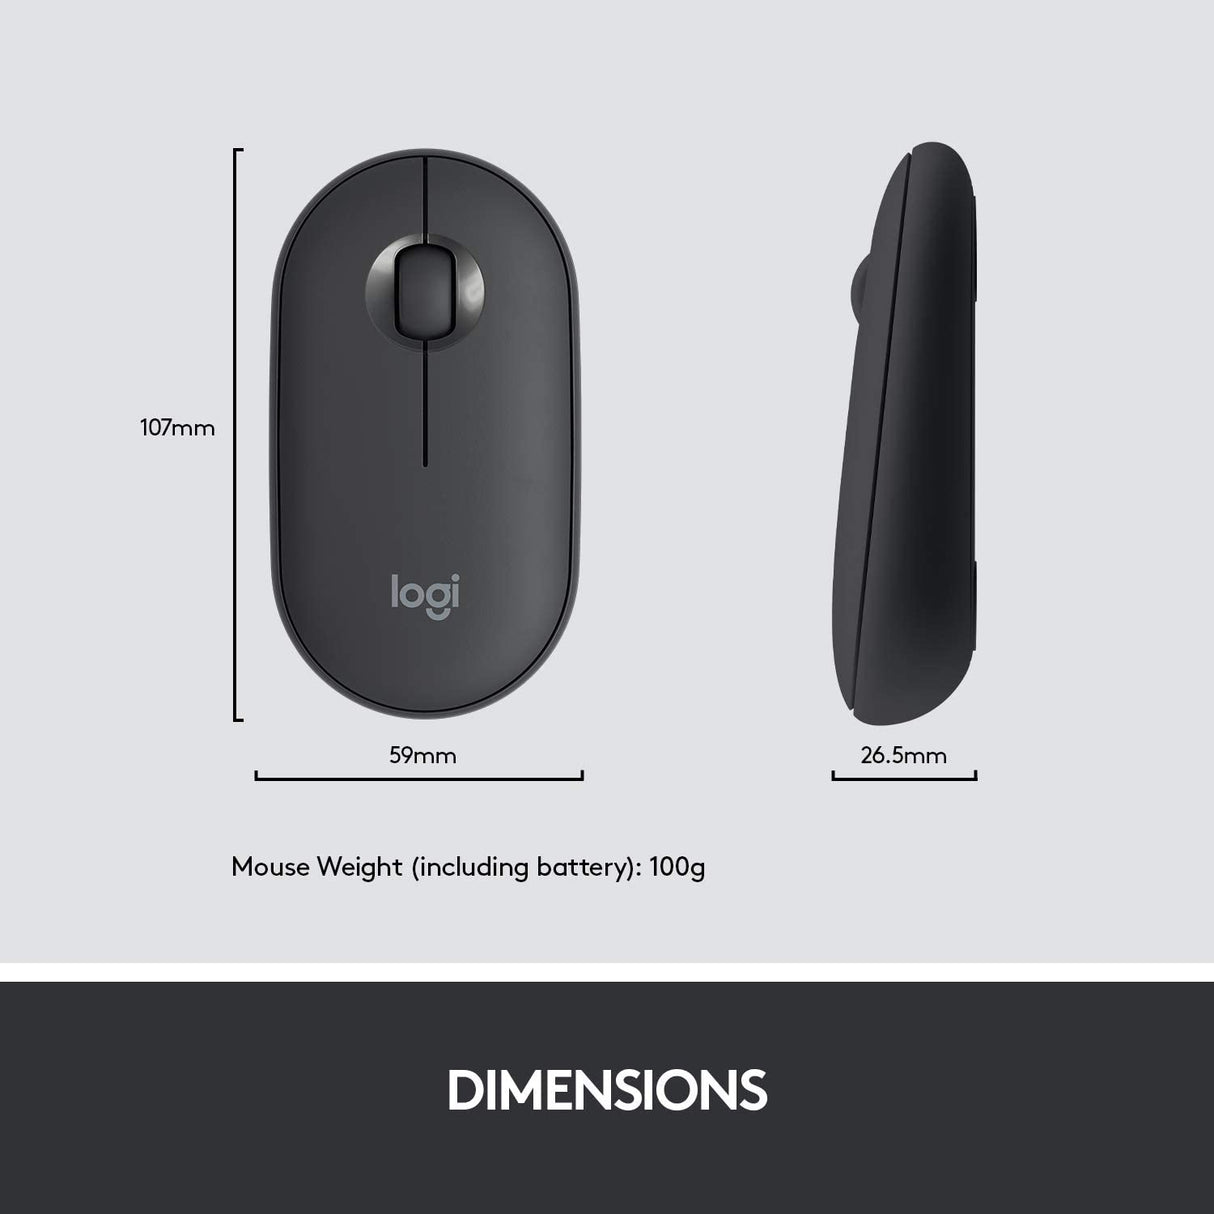 Logitech MK470 Wireless Slim Keyboard and Mouse Black